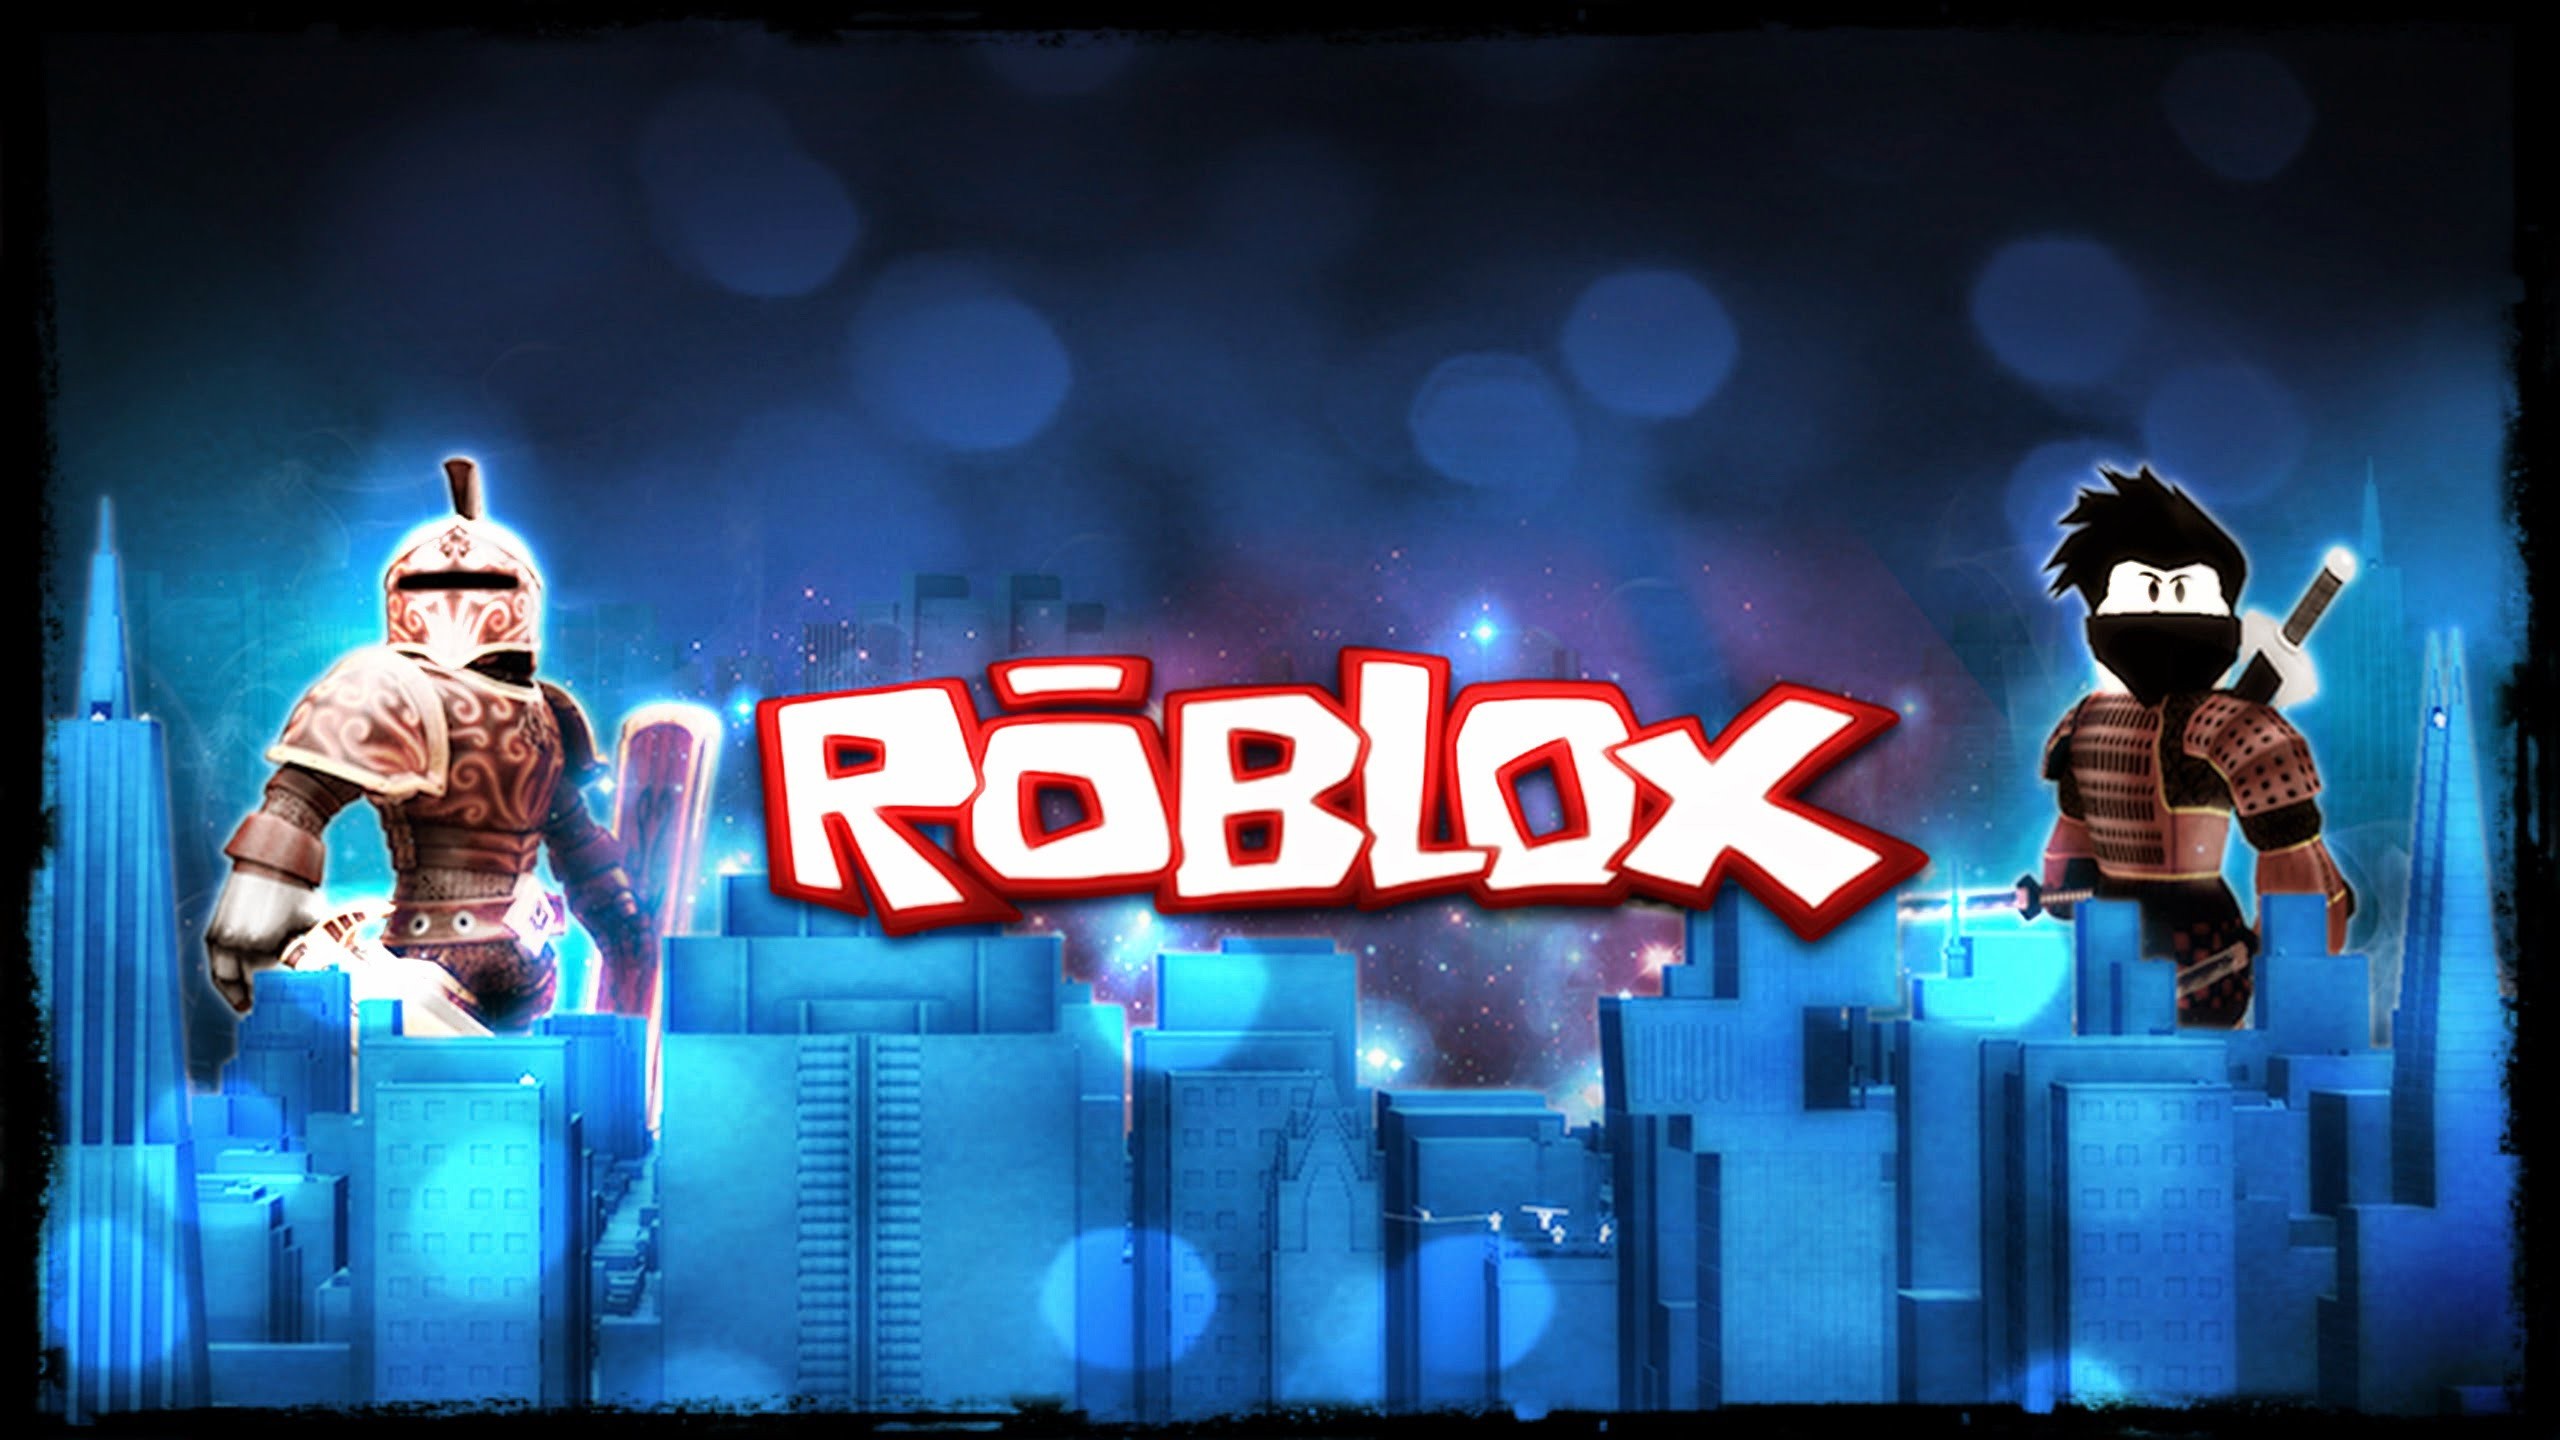 Roblox Background Download Free Beautiful Hd Backgrounds For - galaxy stylish roblox backgrounds